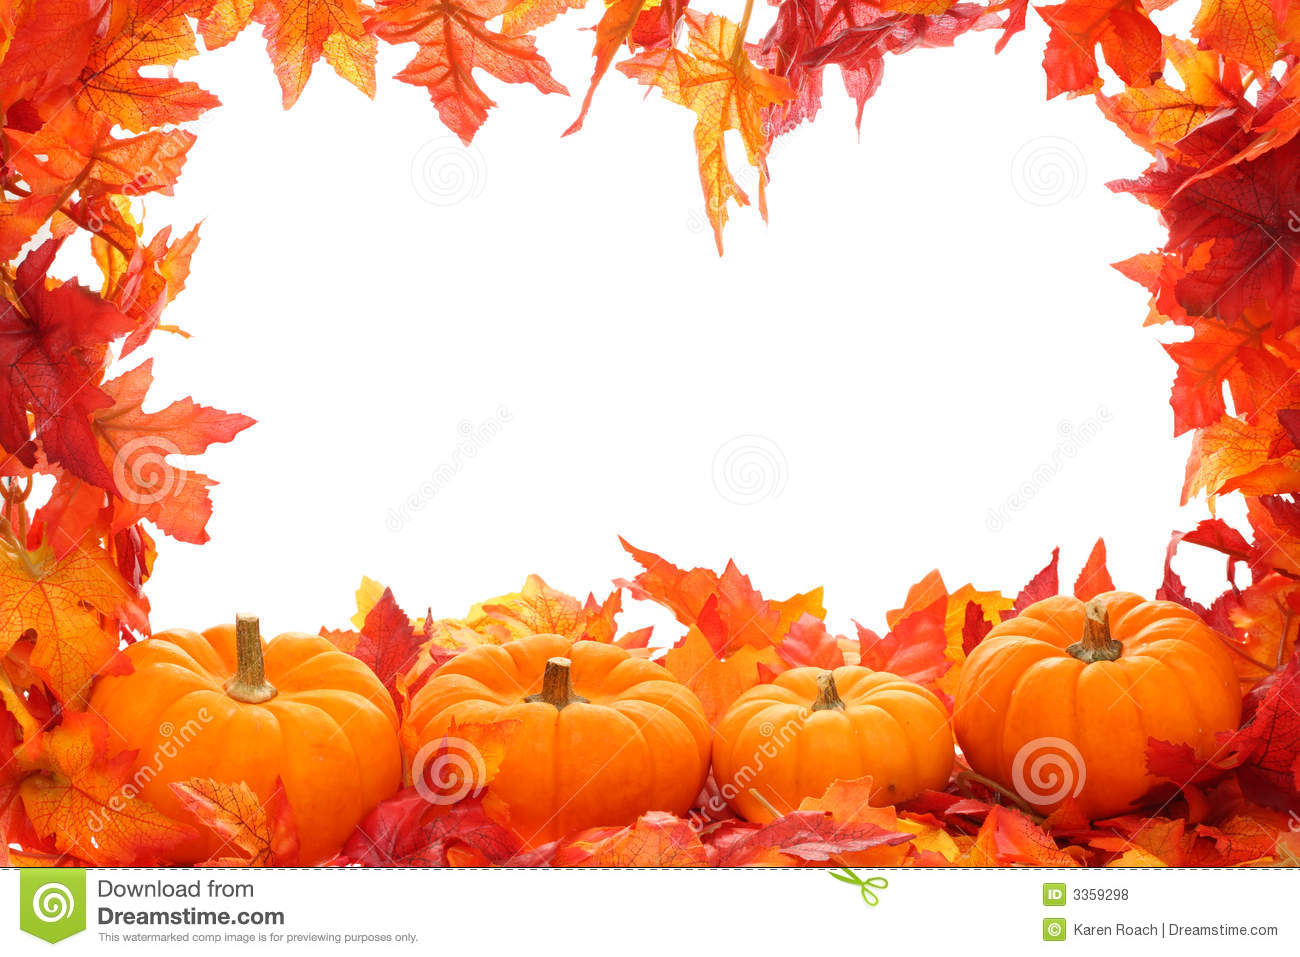 fall background image #3